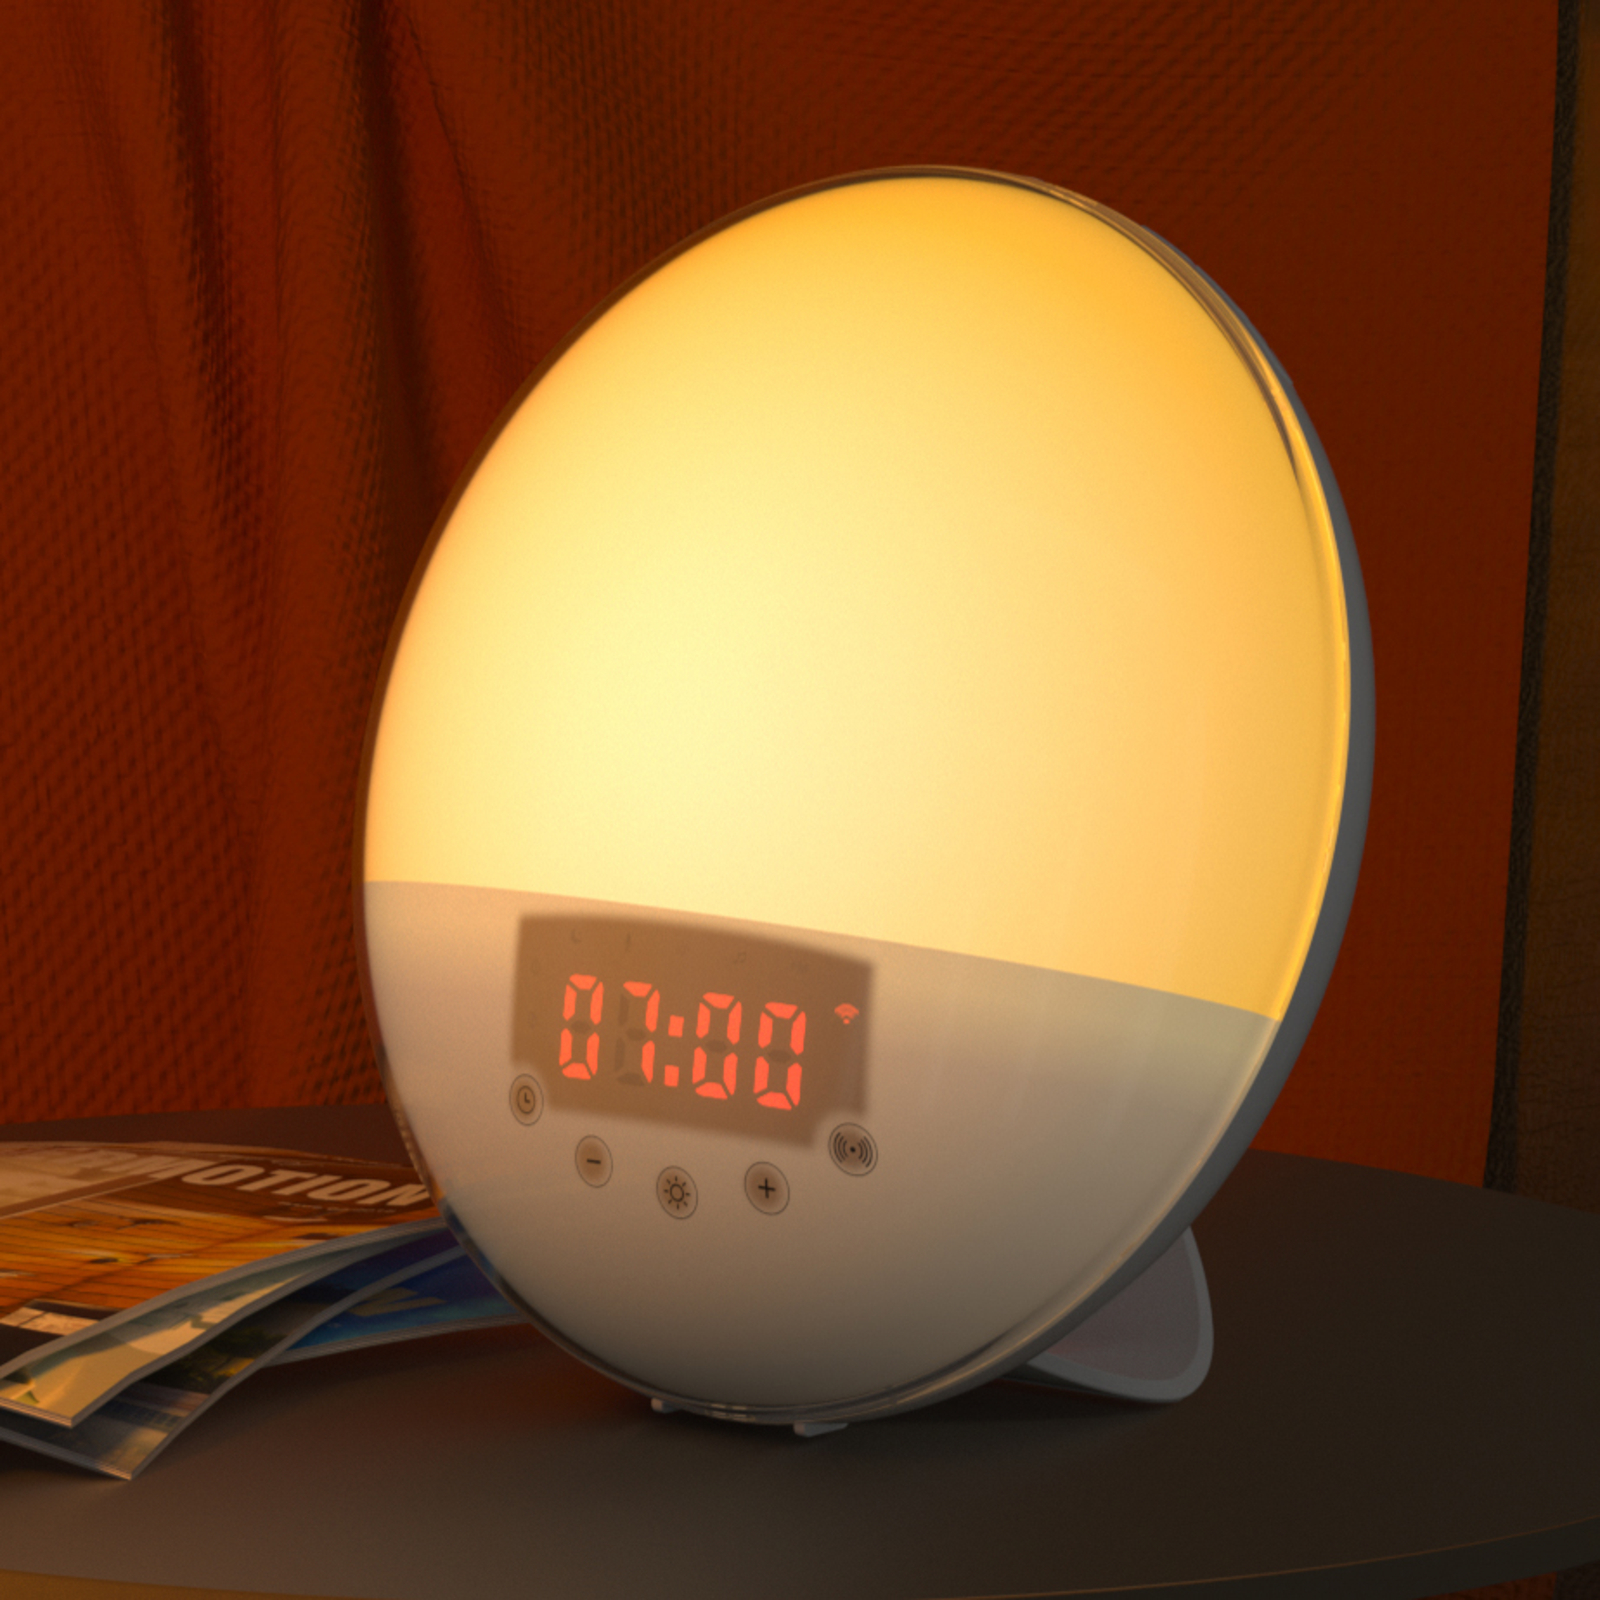 Prios Helinova WiFi light alarm clock FM radio RGB